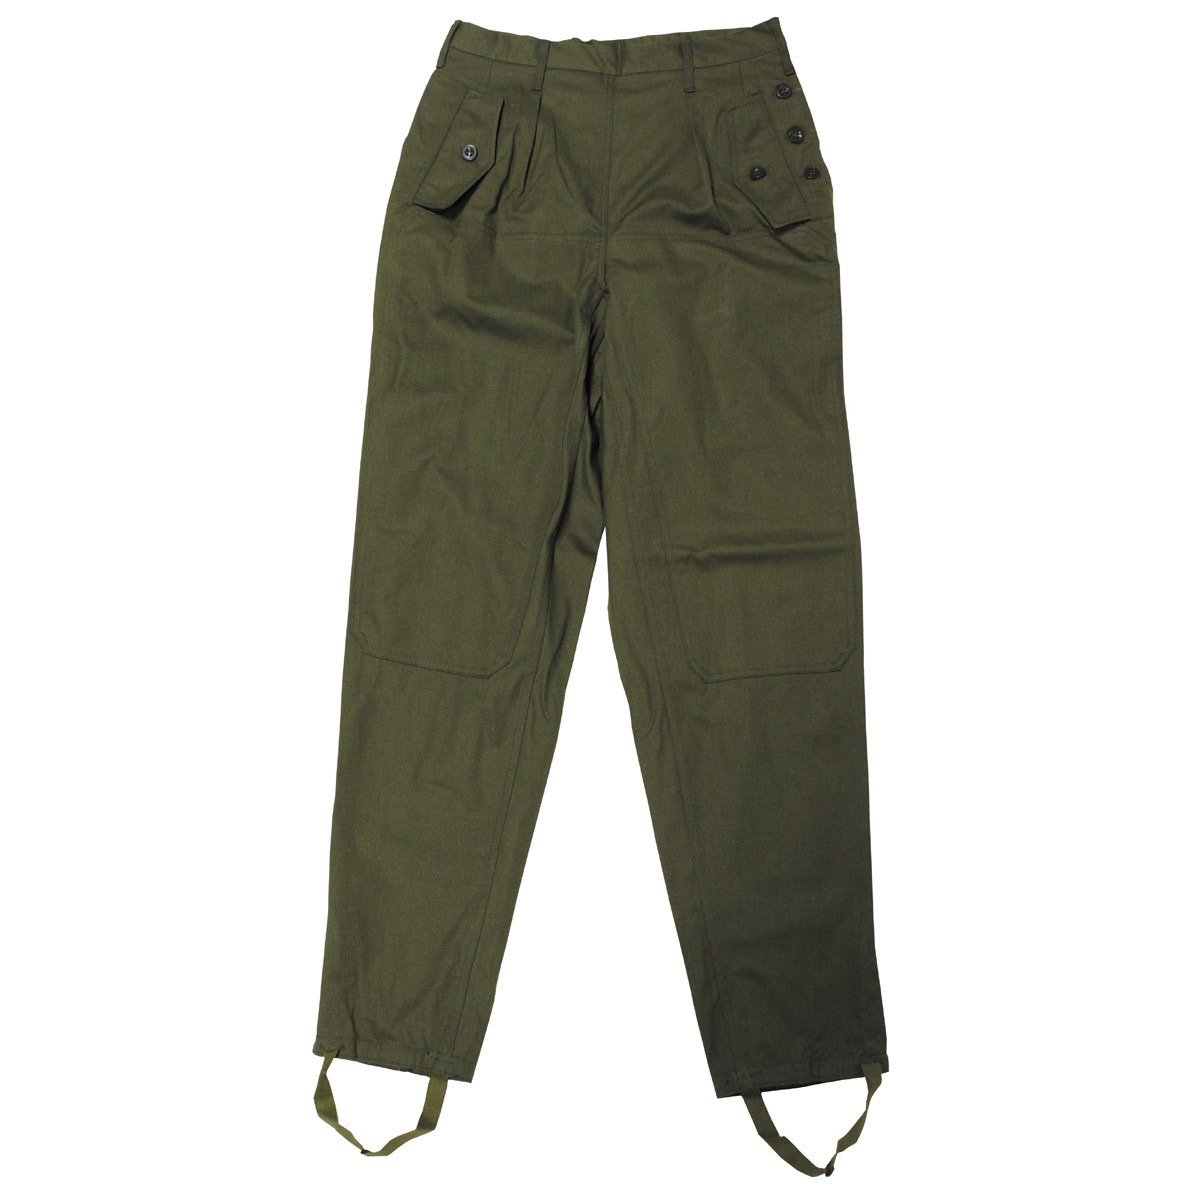 CZ/SK Pants, M 85, OD green, like new | Military Surplus \ Used ...